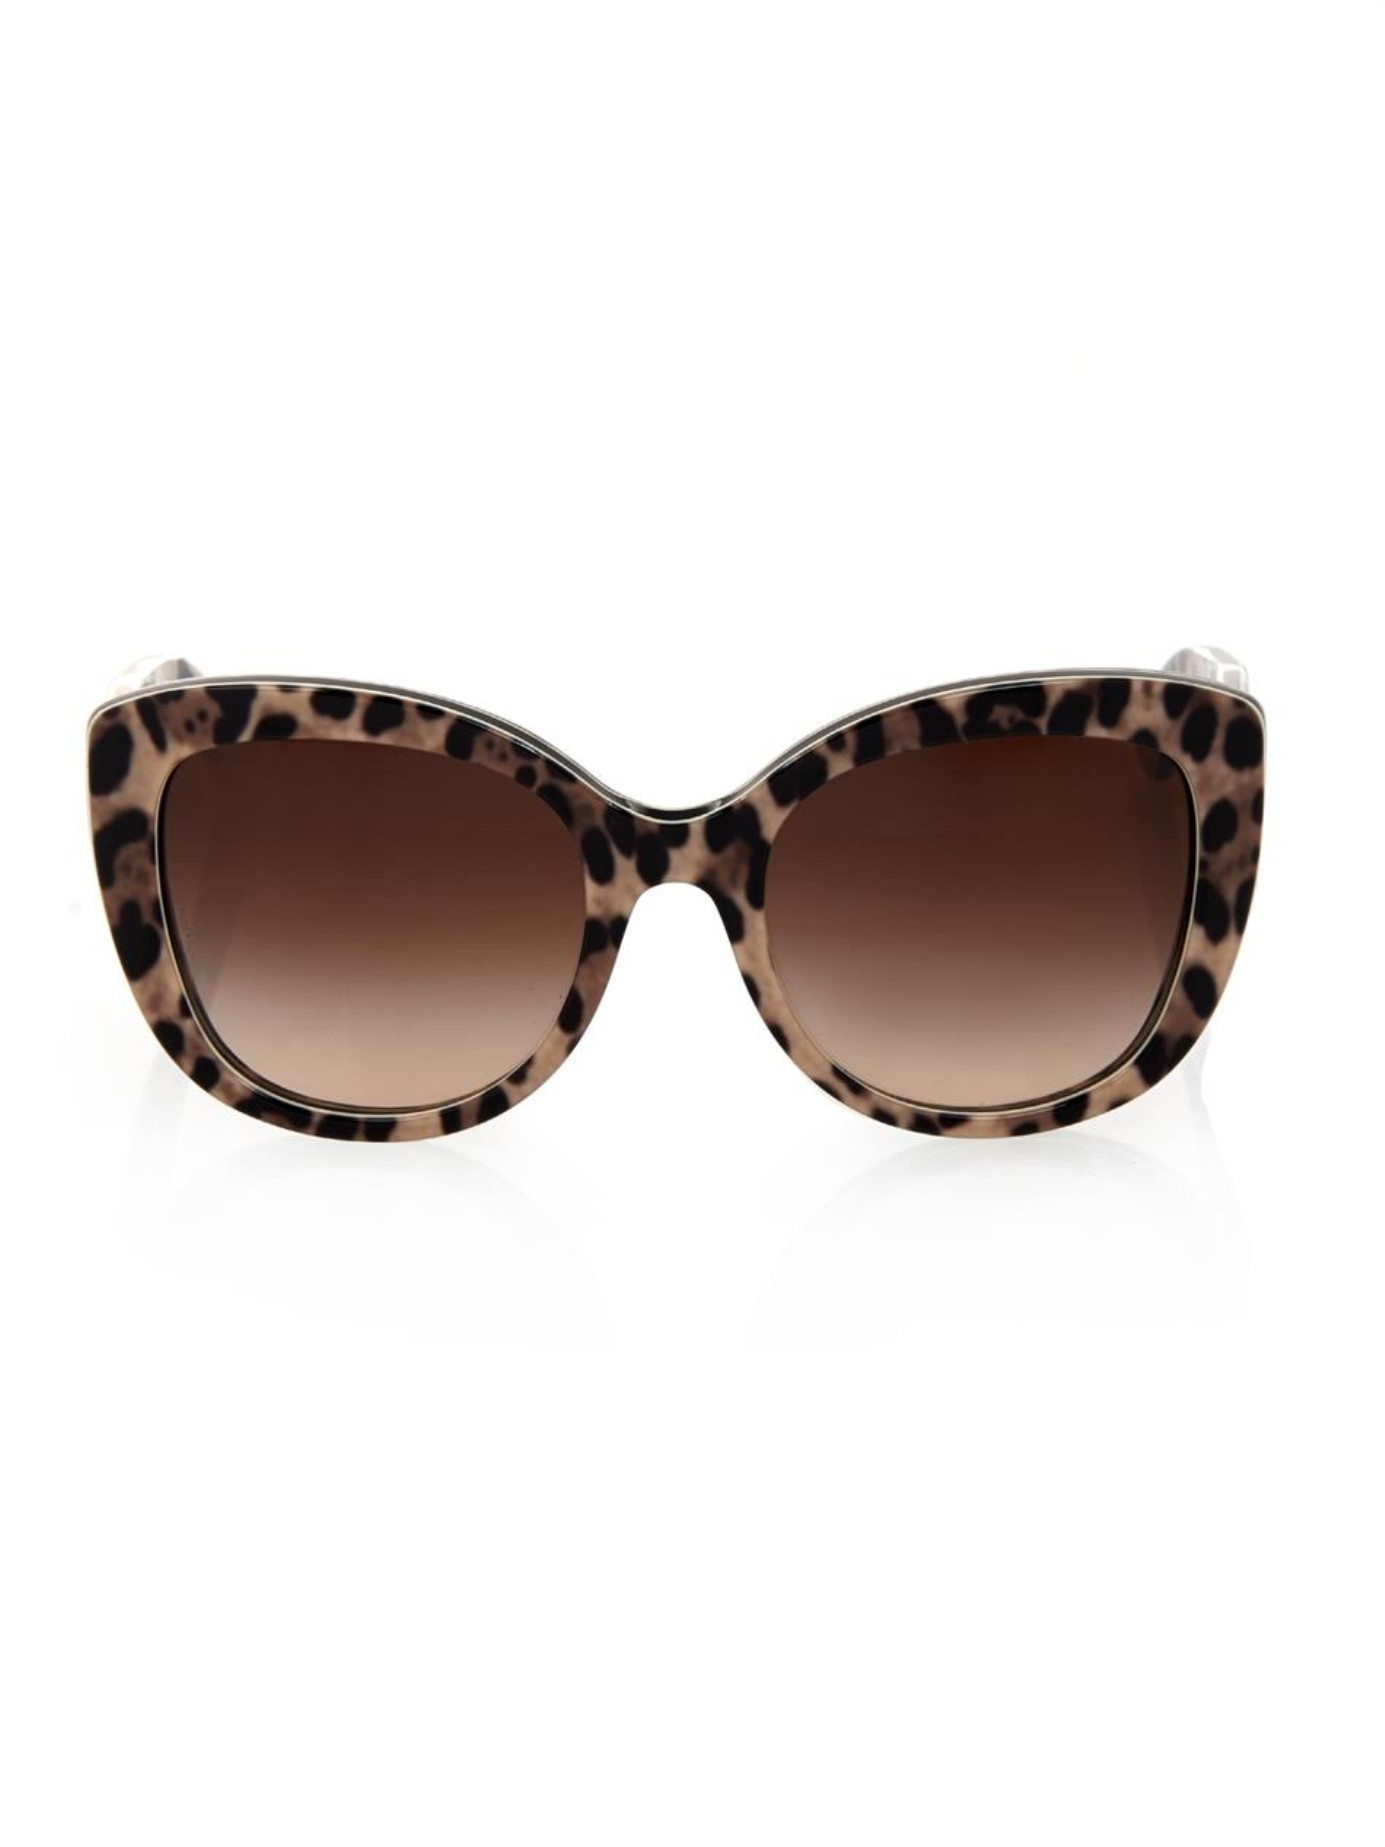 Dolce & Gabbana Leopard-Print Cat-Eye Sunglasses | Lyst